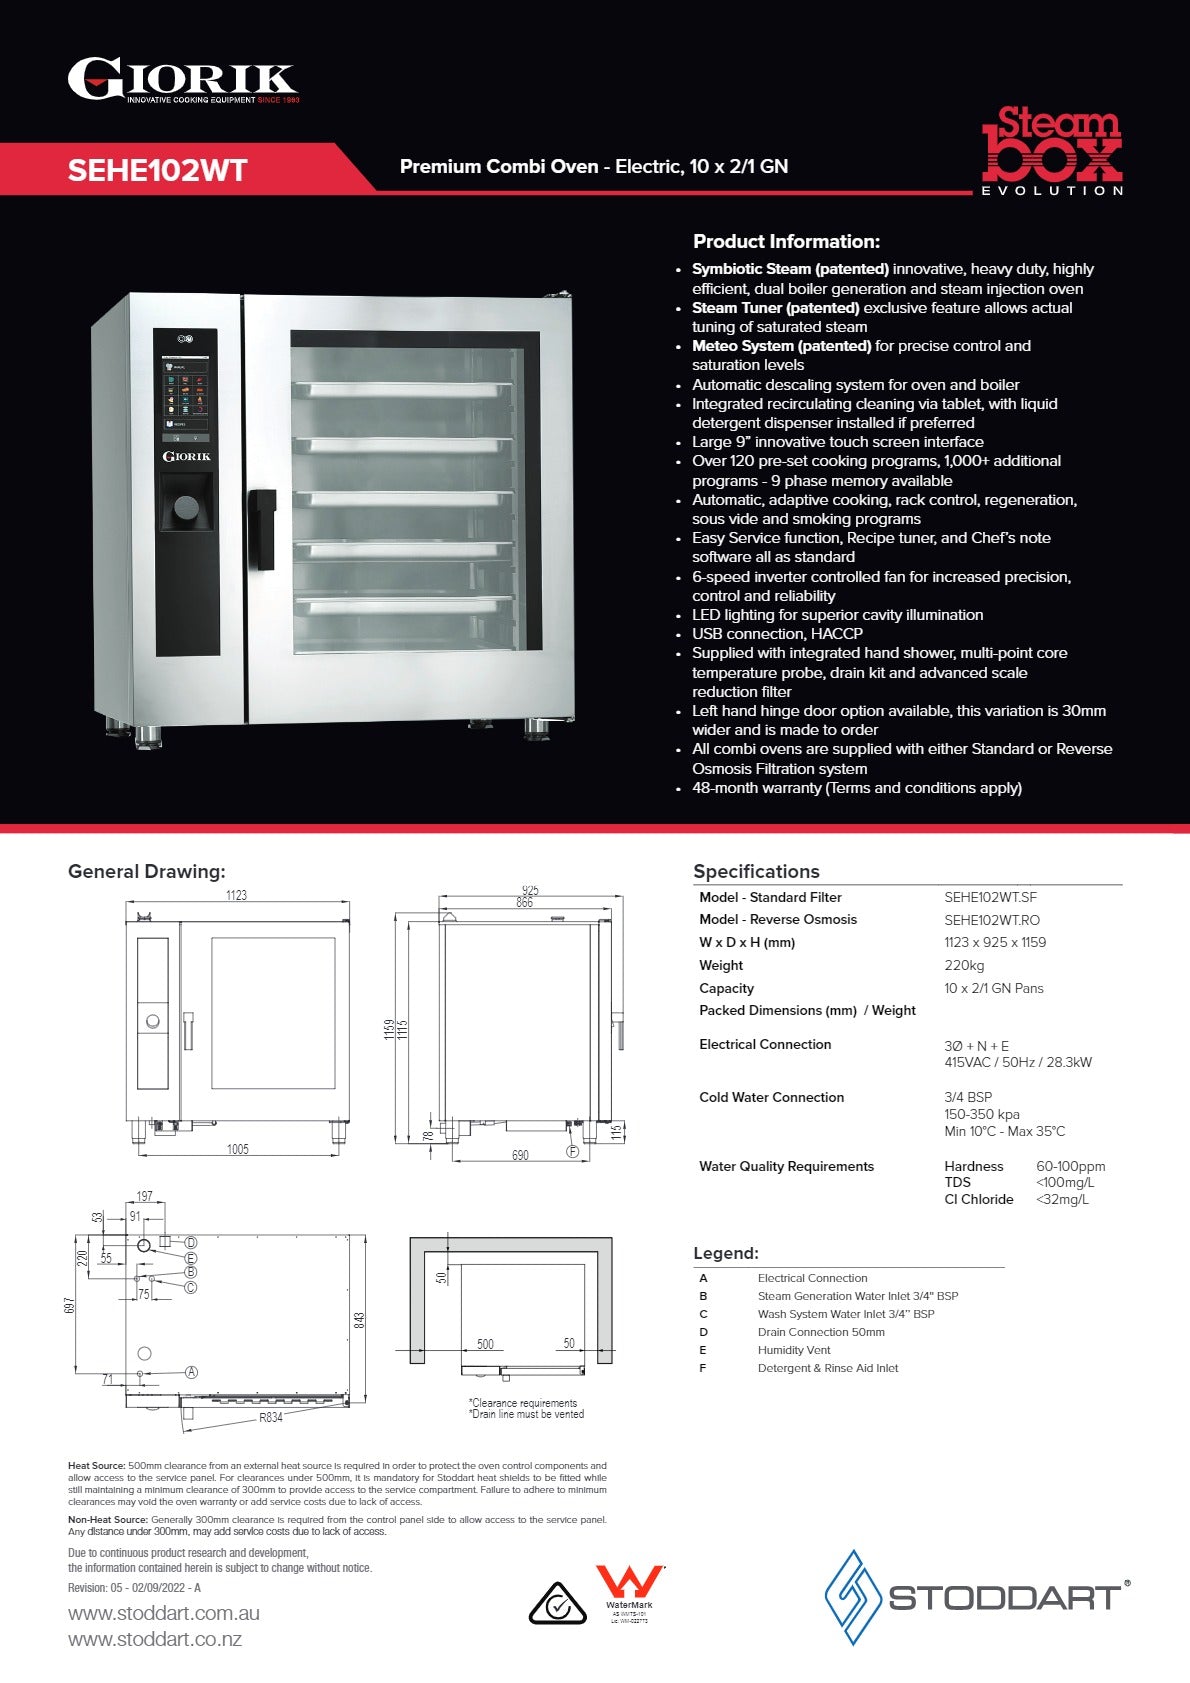 Thumbnail - Giorik Steambox Evolution SEHE102WT.RO - Combi Oven